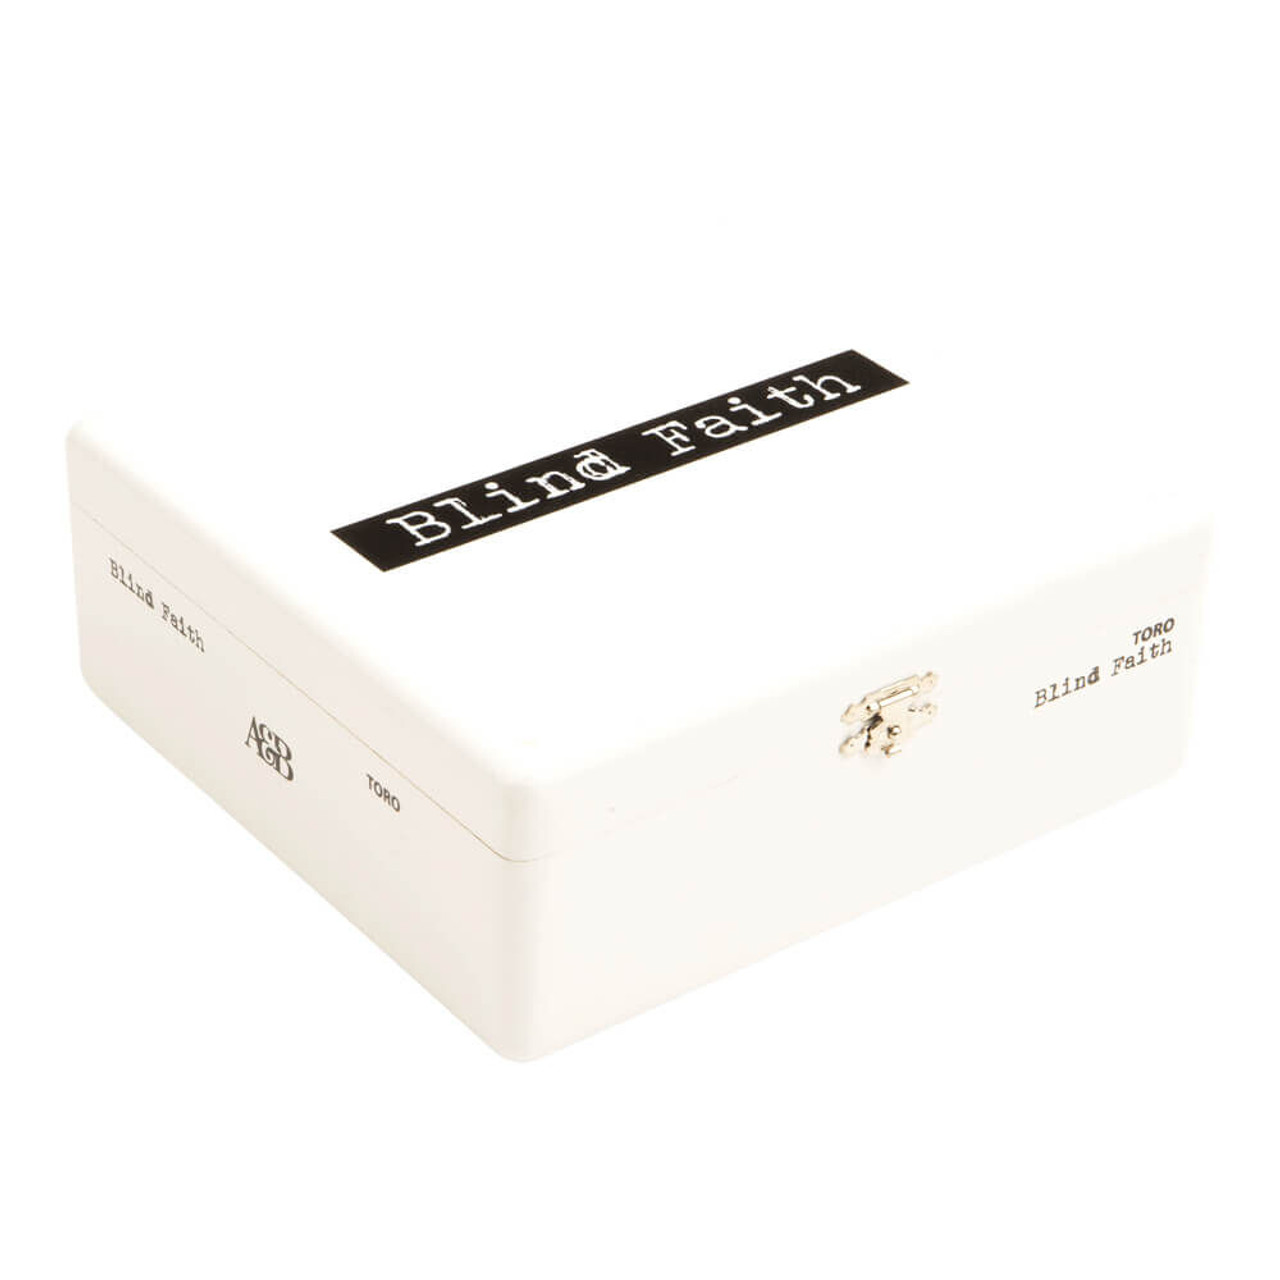 Alec Bradley Blind Faith Toro Cigars - 6 x 52 (Box of 24) *Box